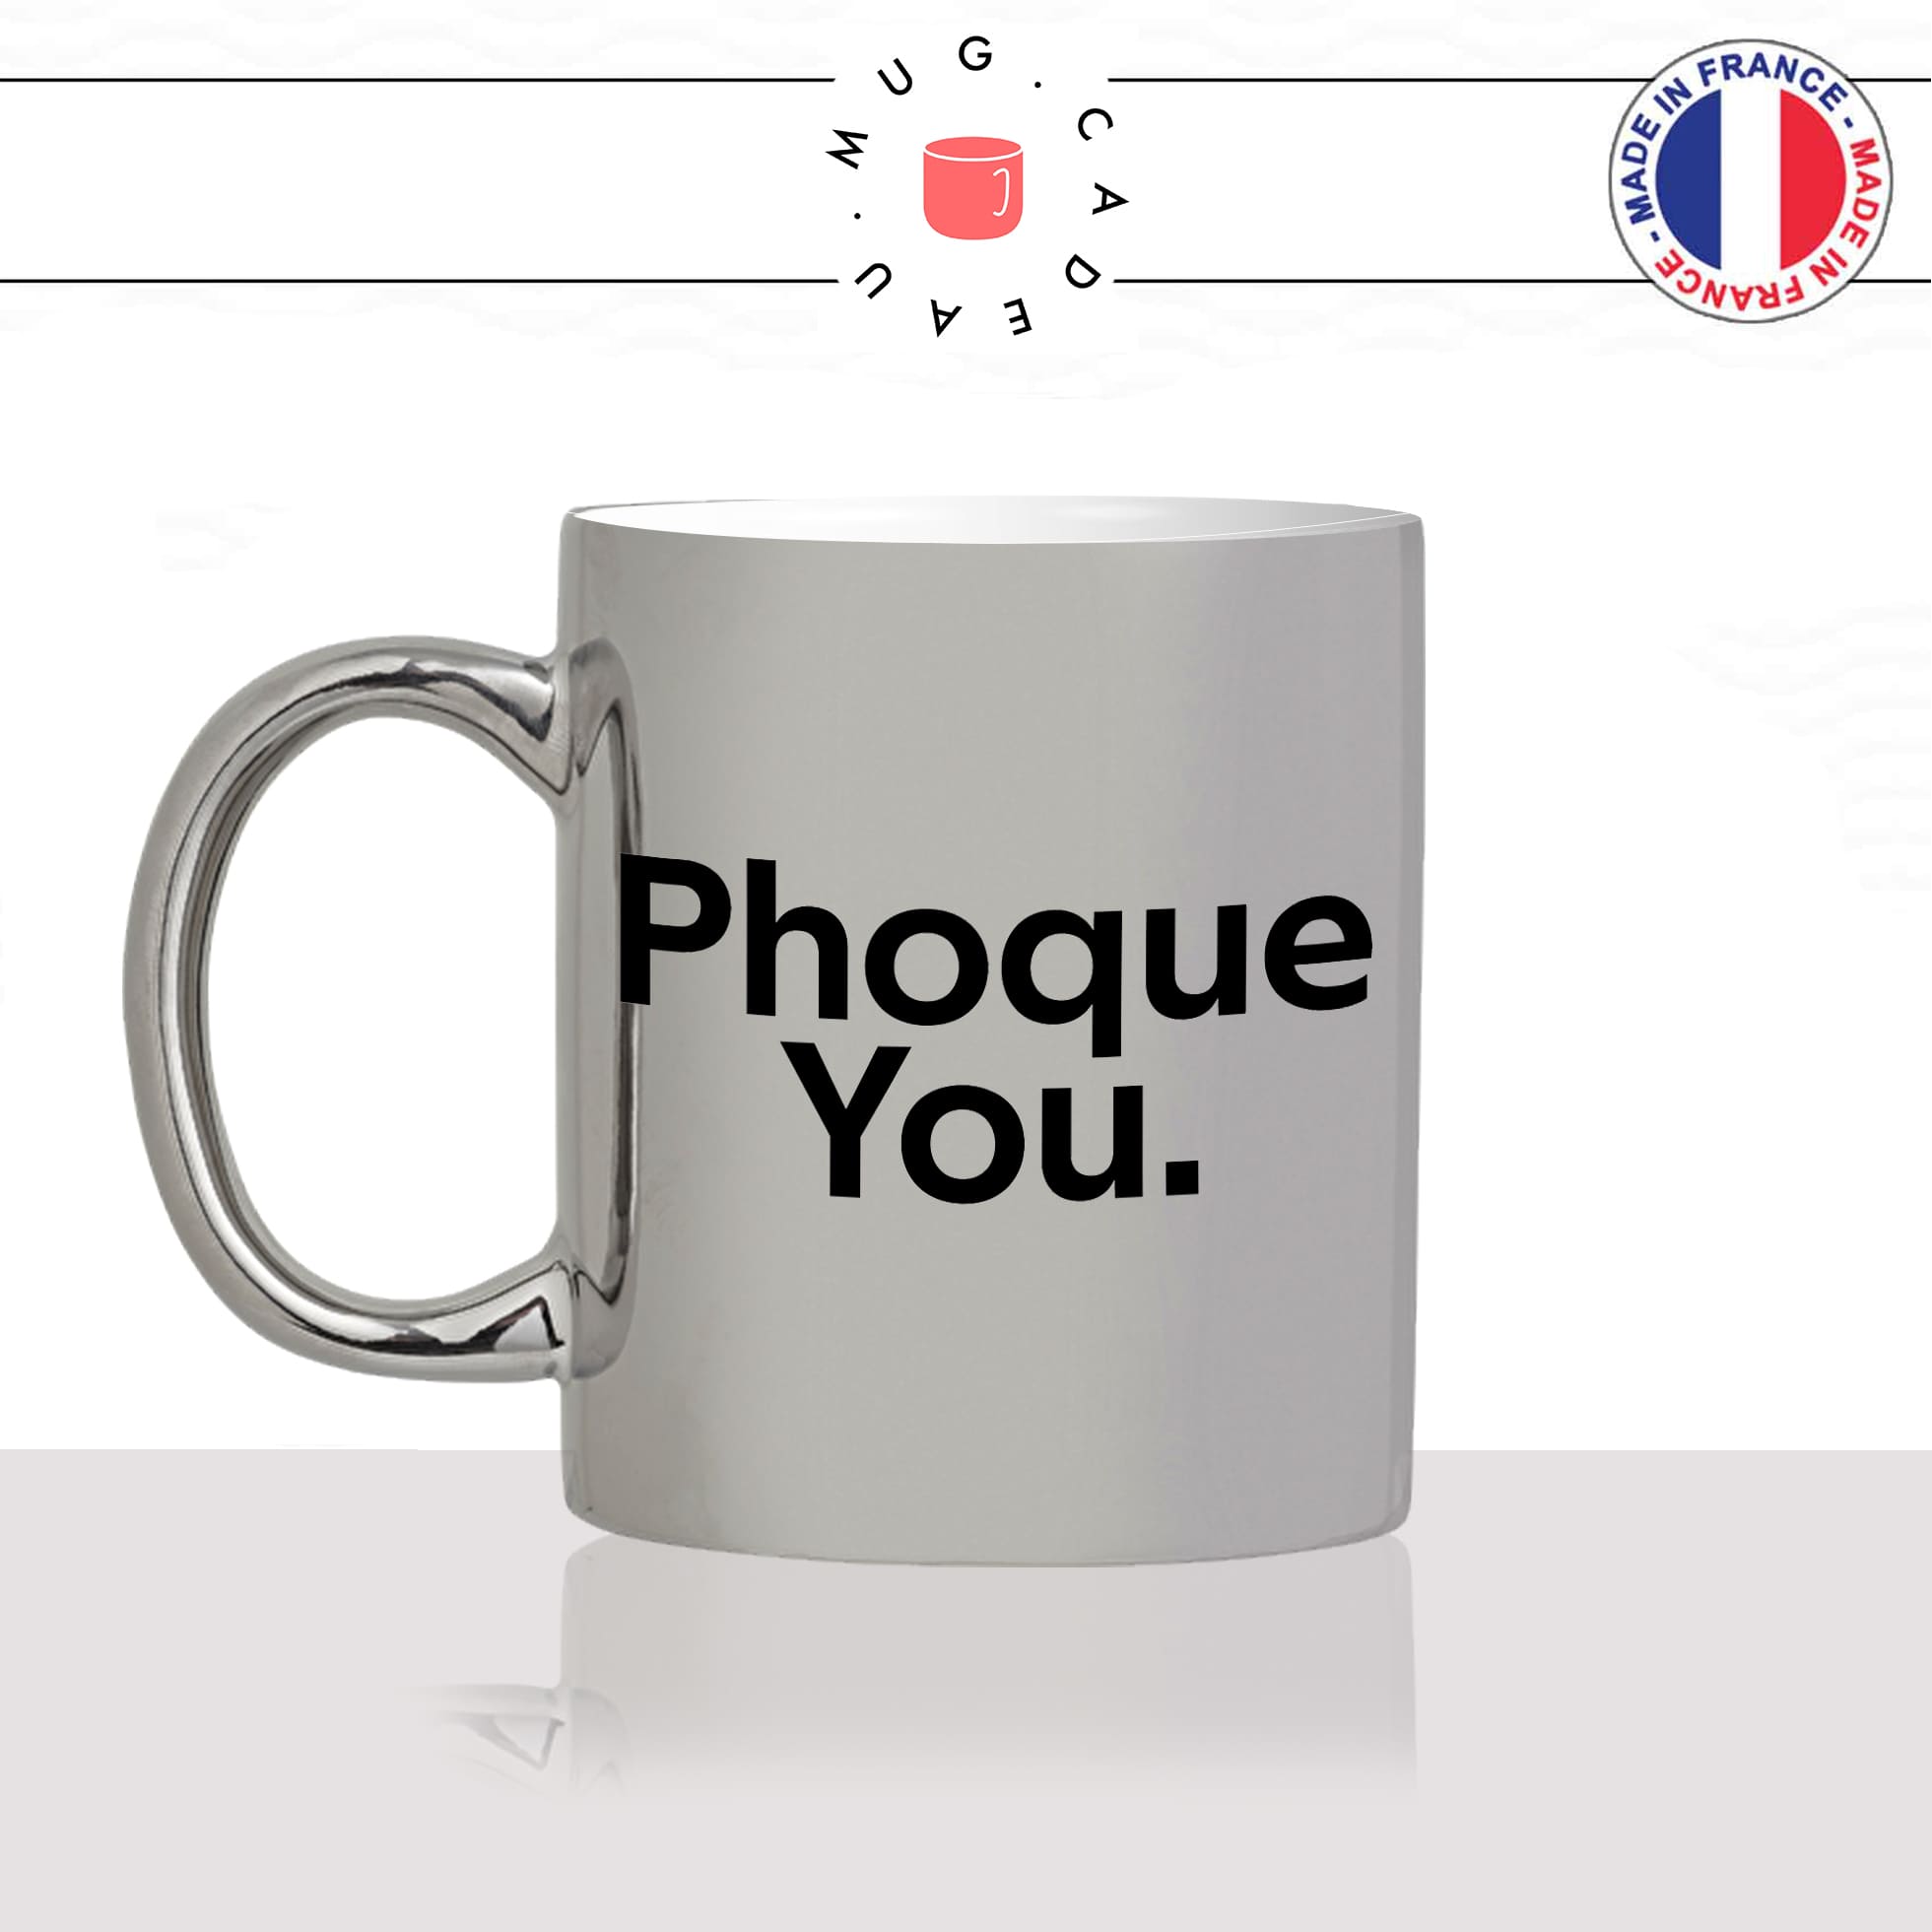 mug-tasse-argenté-argent-gris-silver-phoque-you-fuck-u-animal-drole-humour-fun-idée-cadeau-originale-cool